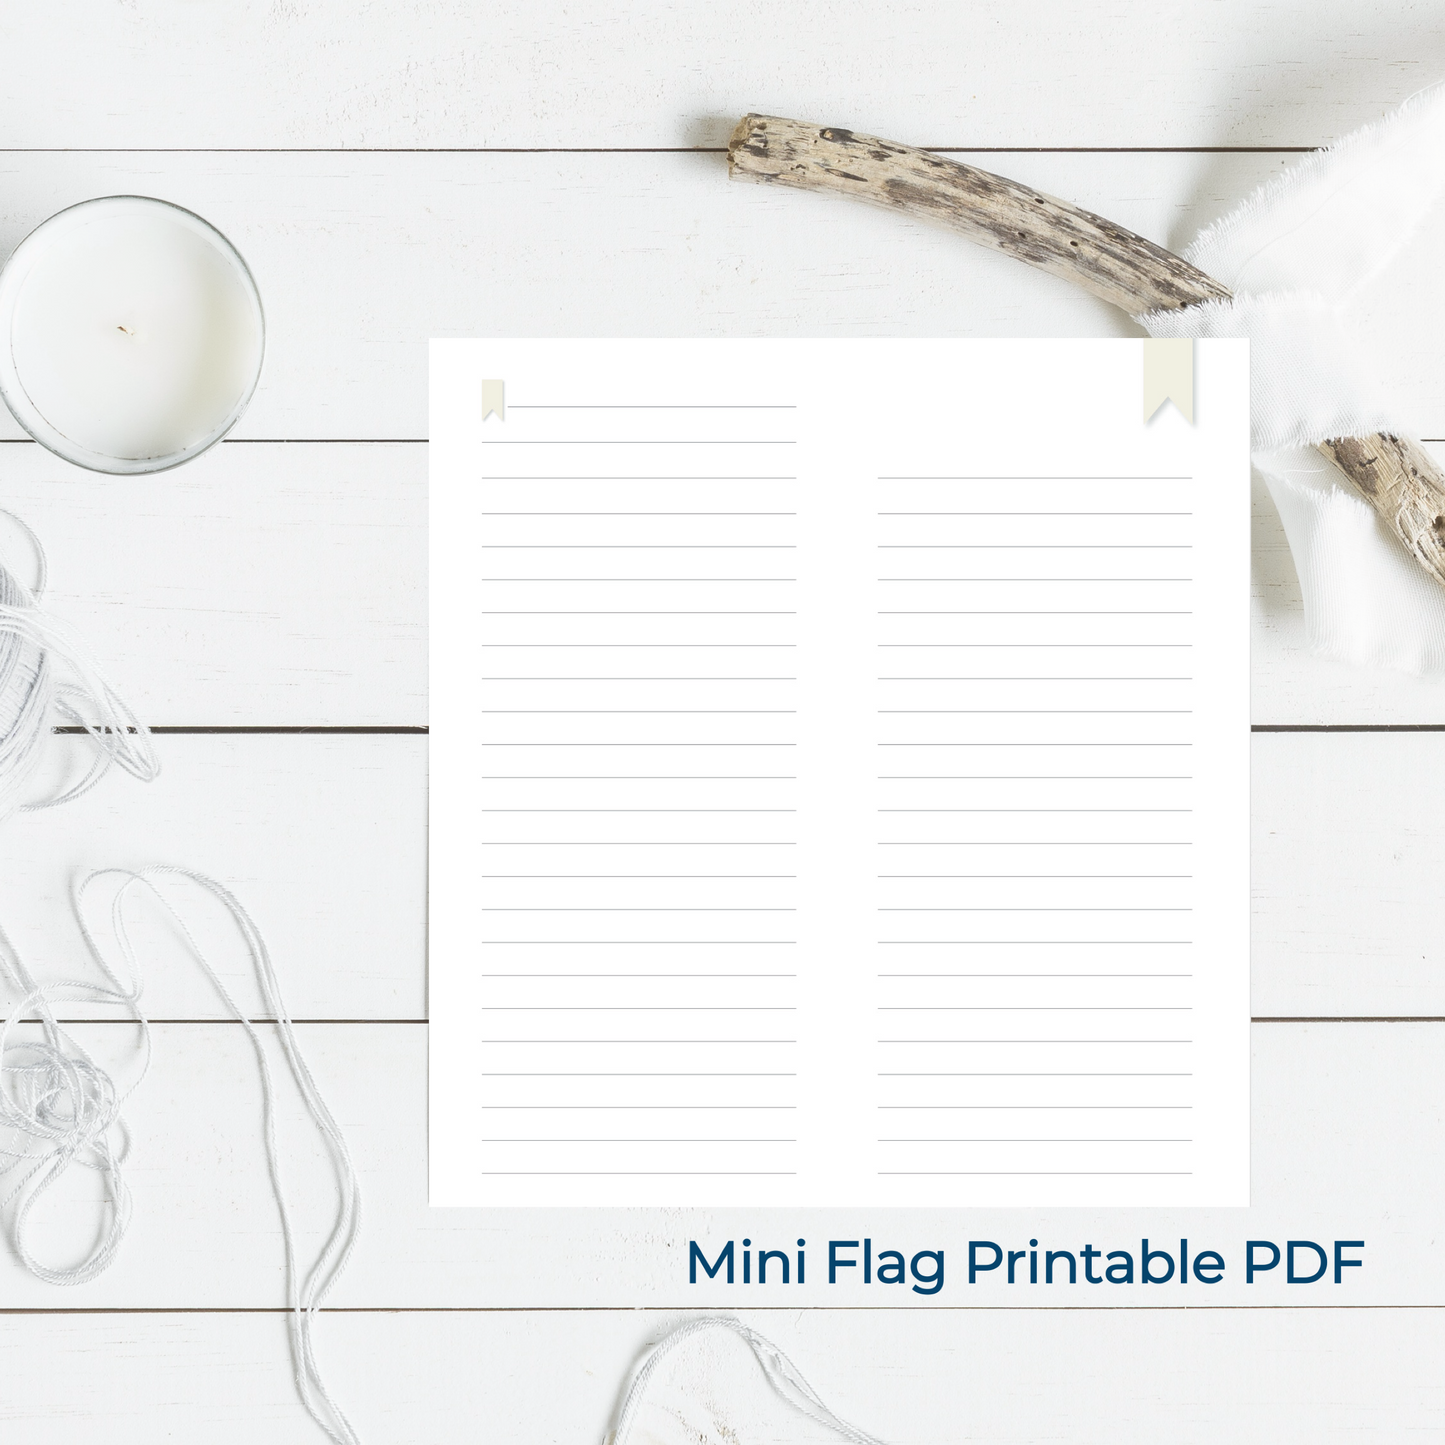 MINI FLAG Decorative Book Binding Signature Printable-PDF